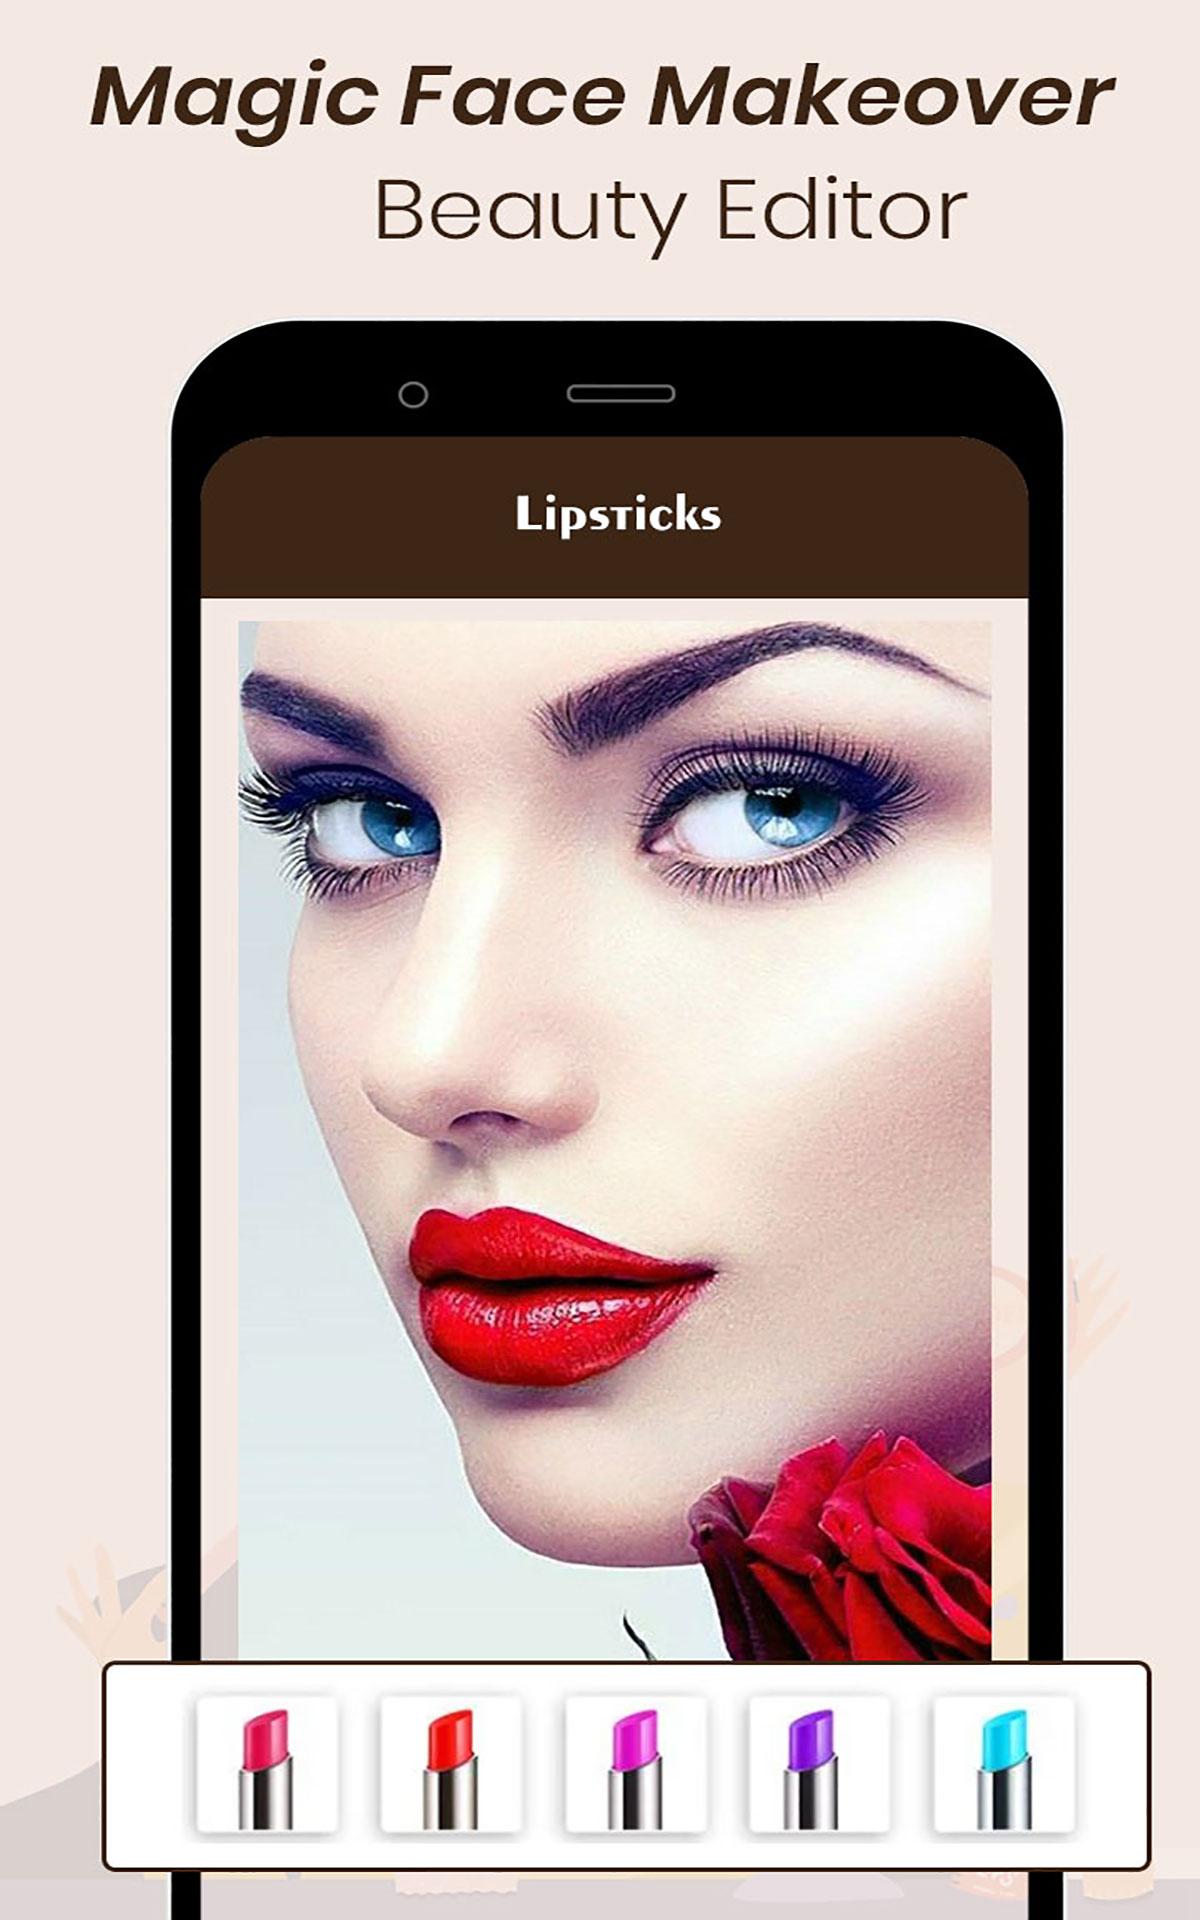 Magic Face Makeover - Beauty Editor 1.0 Screenshot 15